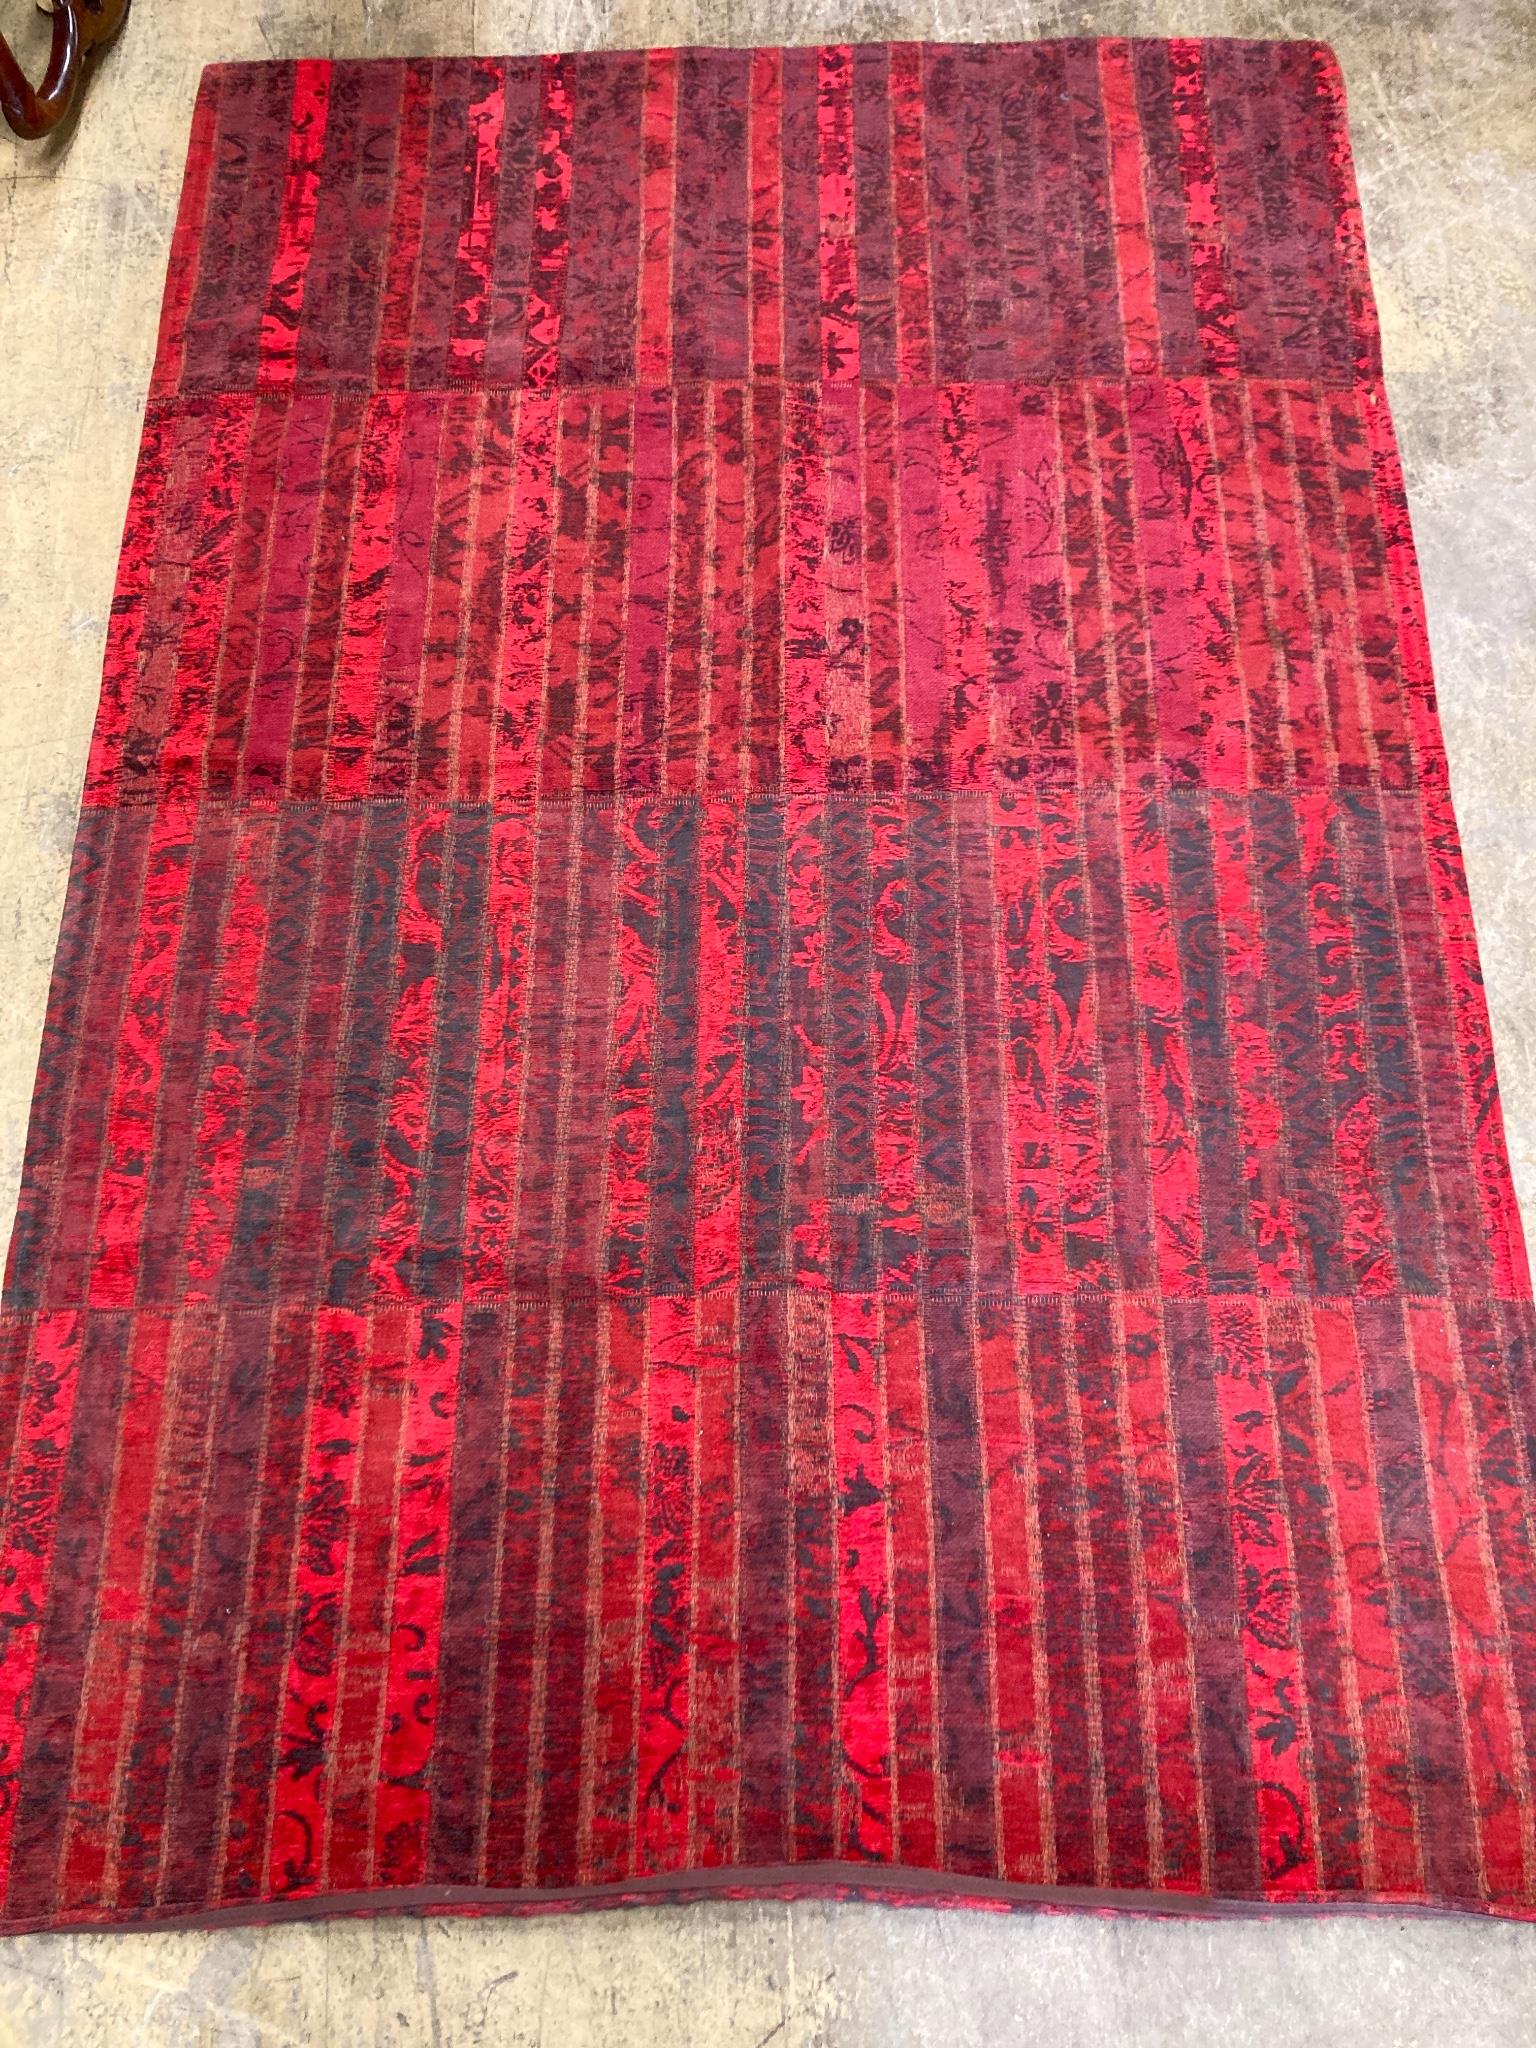 An Afghan flatweave rug, 195 x 134cm